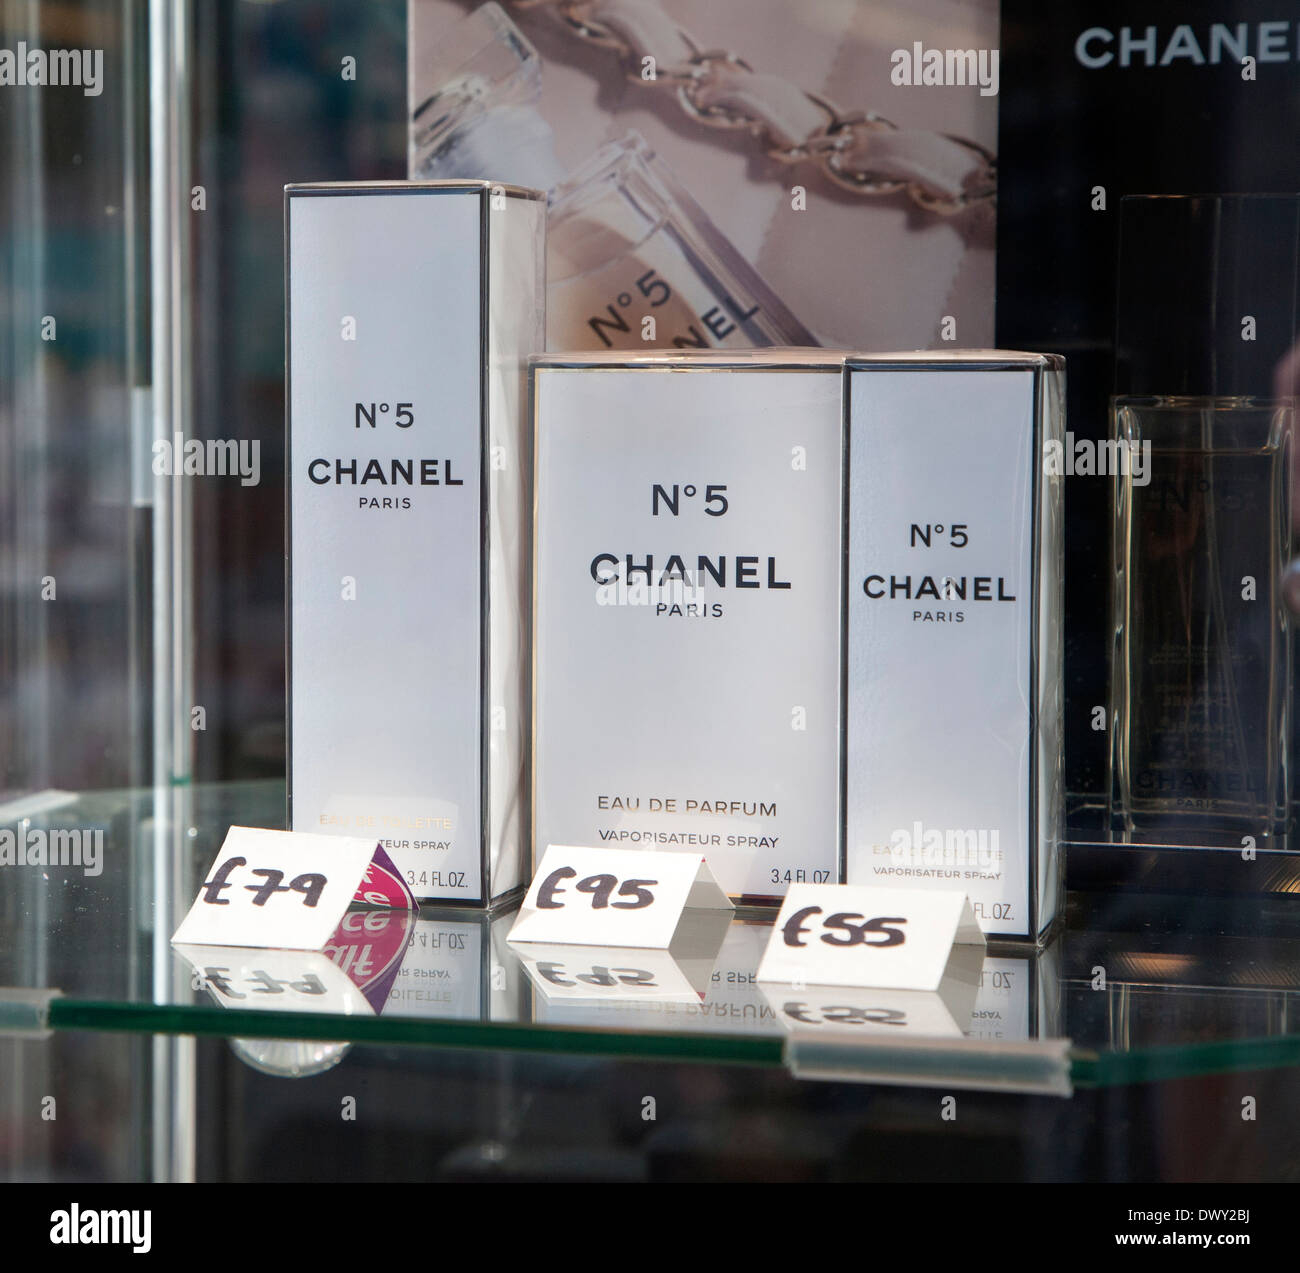 perfume chanel 95